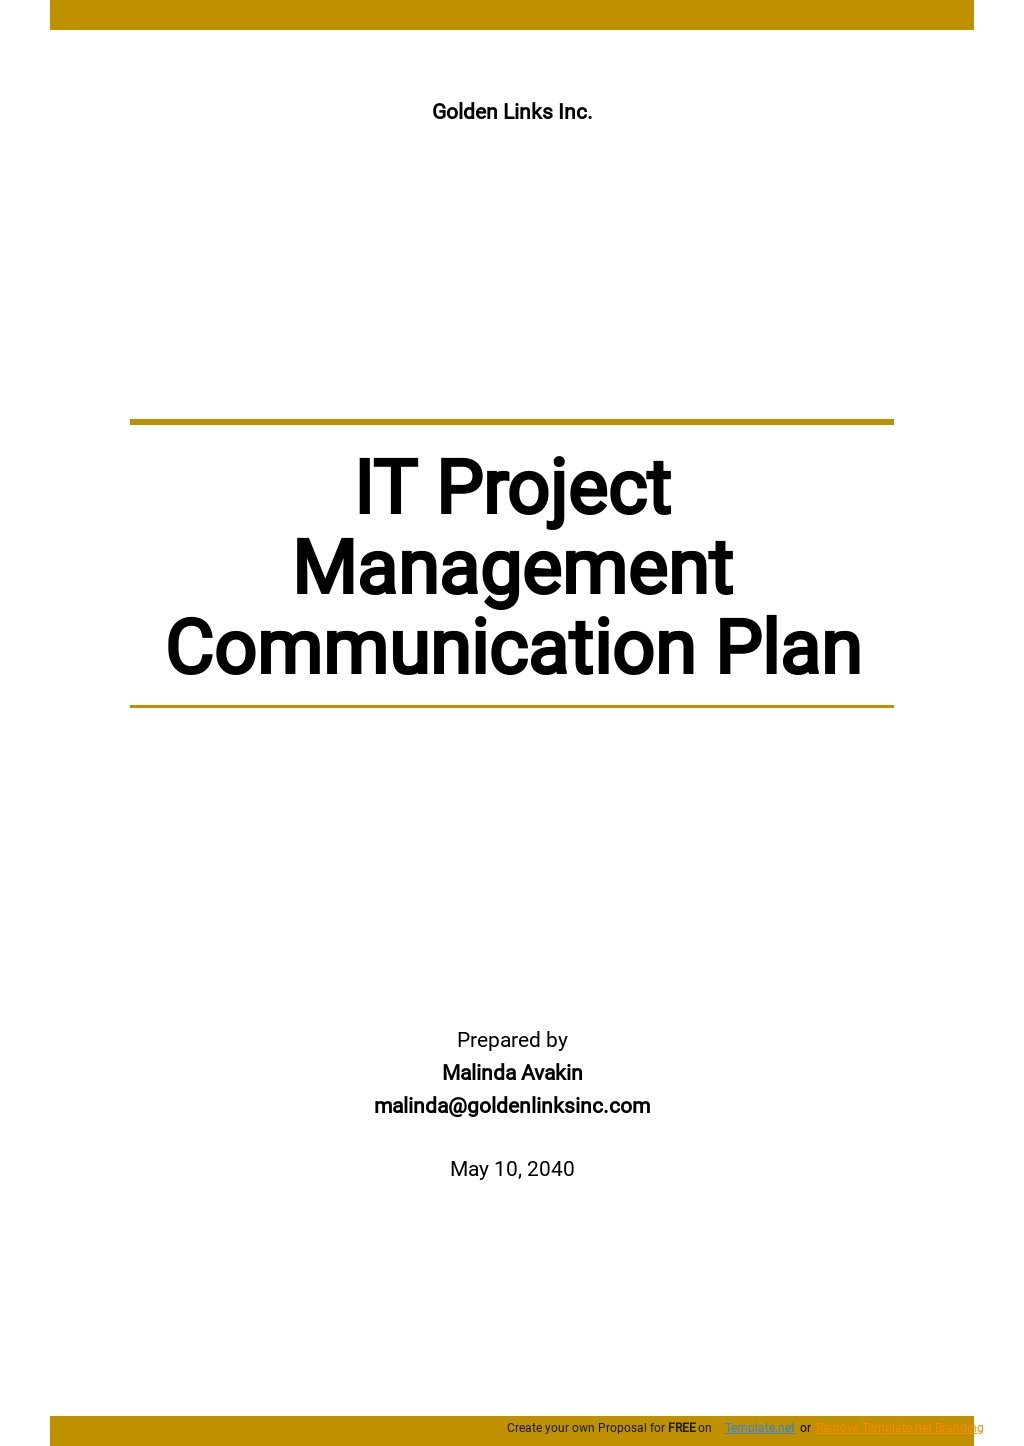 IT Project Management Communication Plan Template.jpe